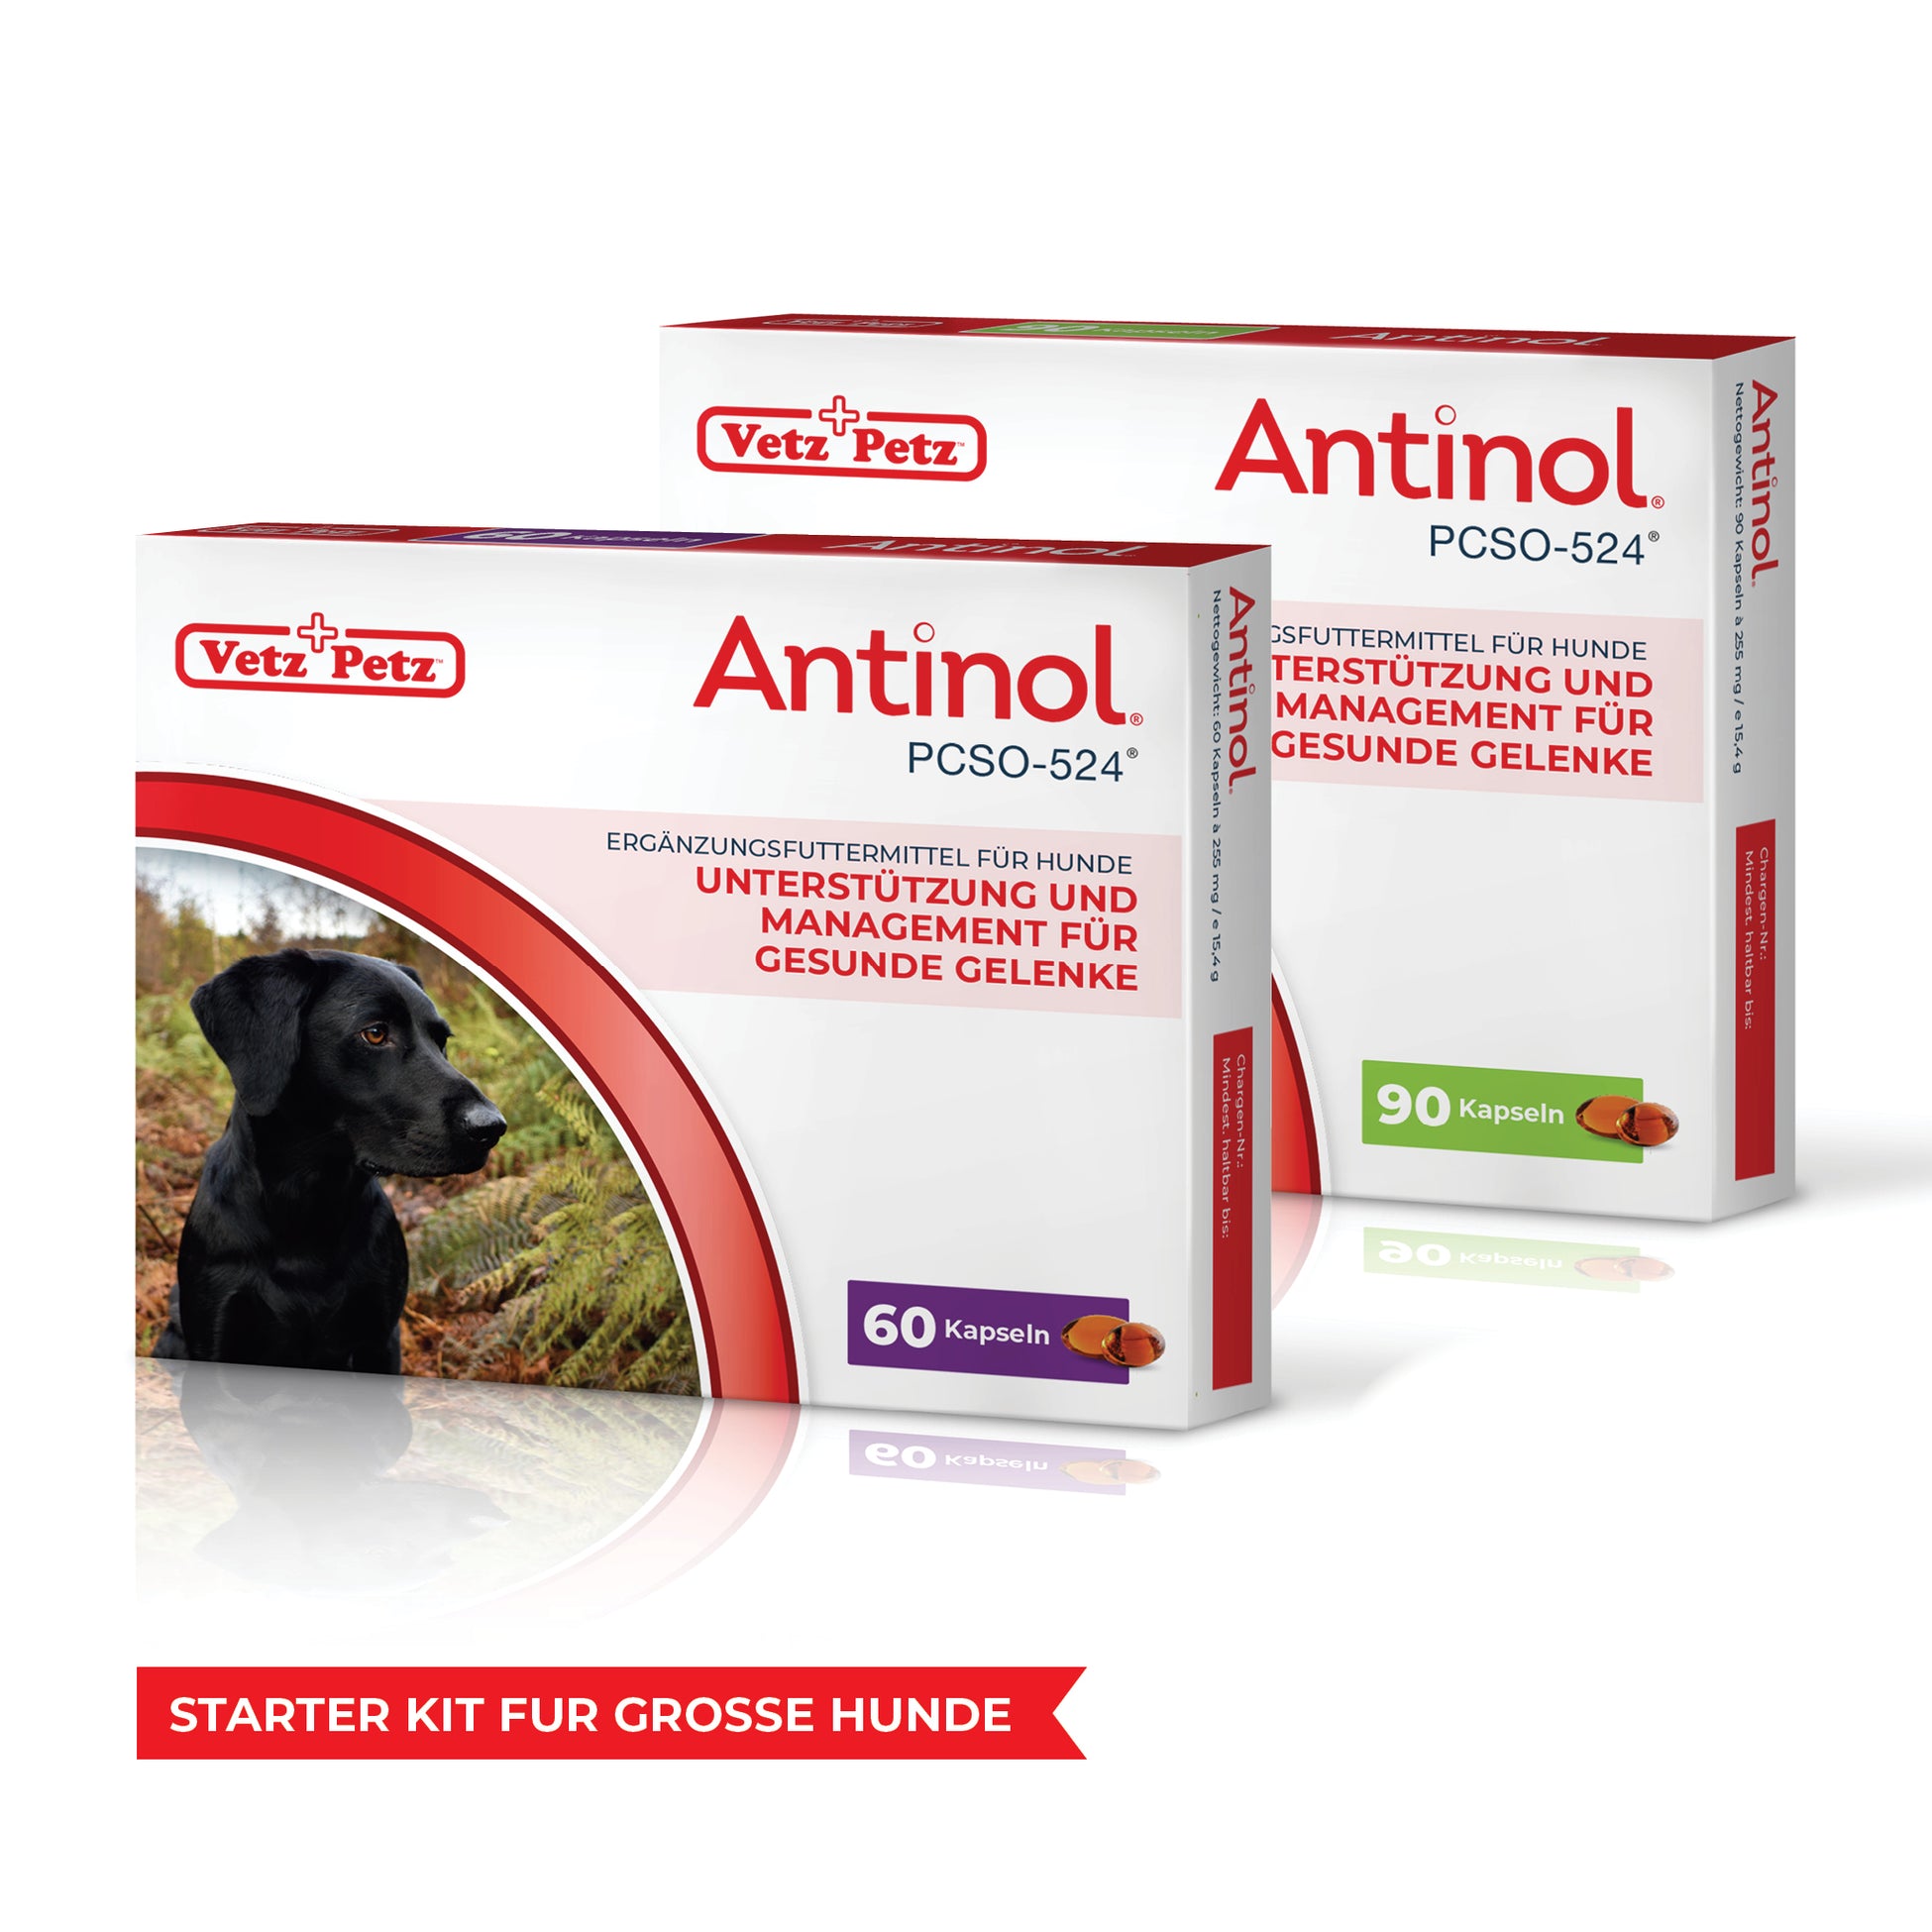 Antinol-Starter-Kit Großer Hund